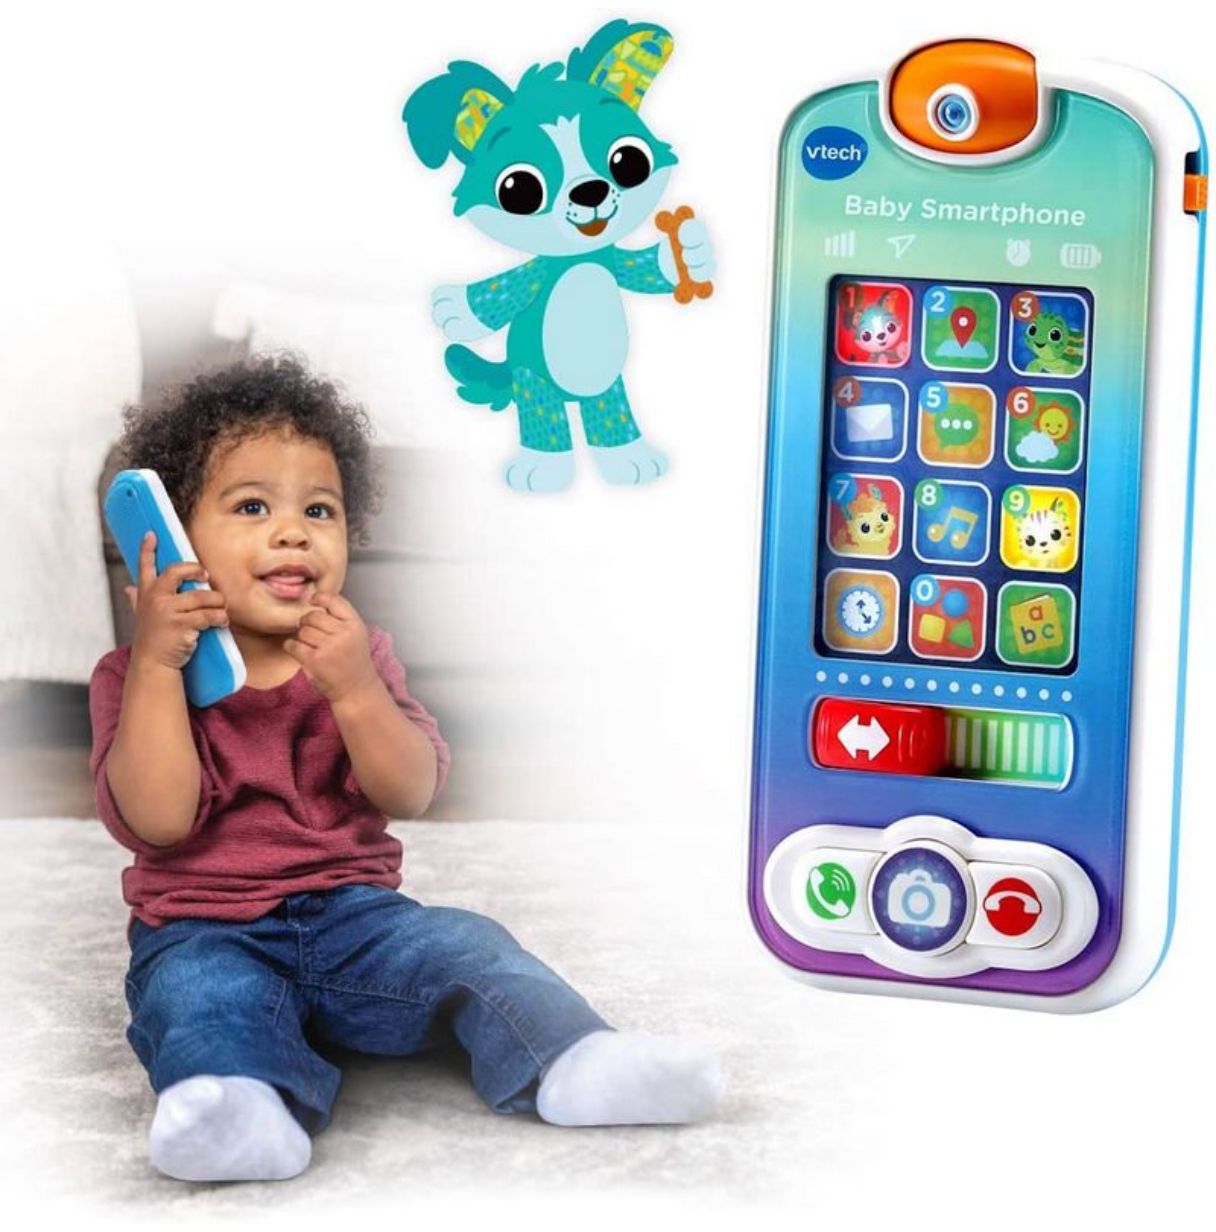 vtech baby smartphone  8537622)